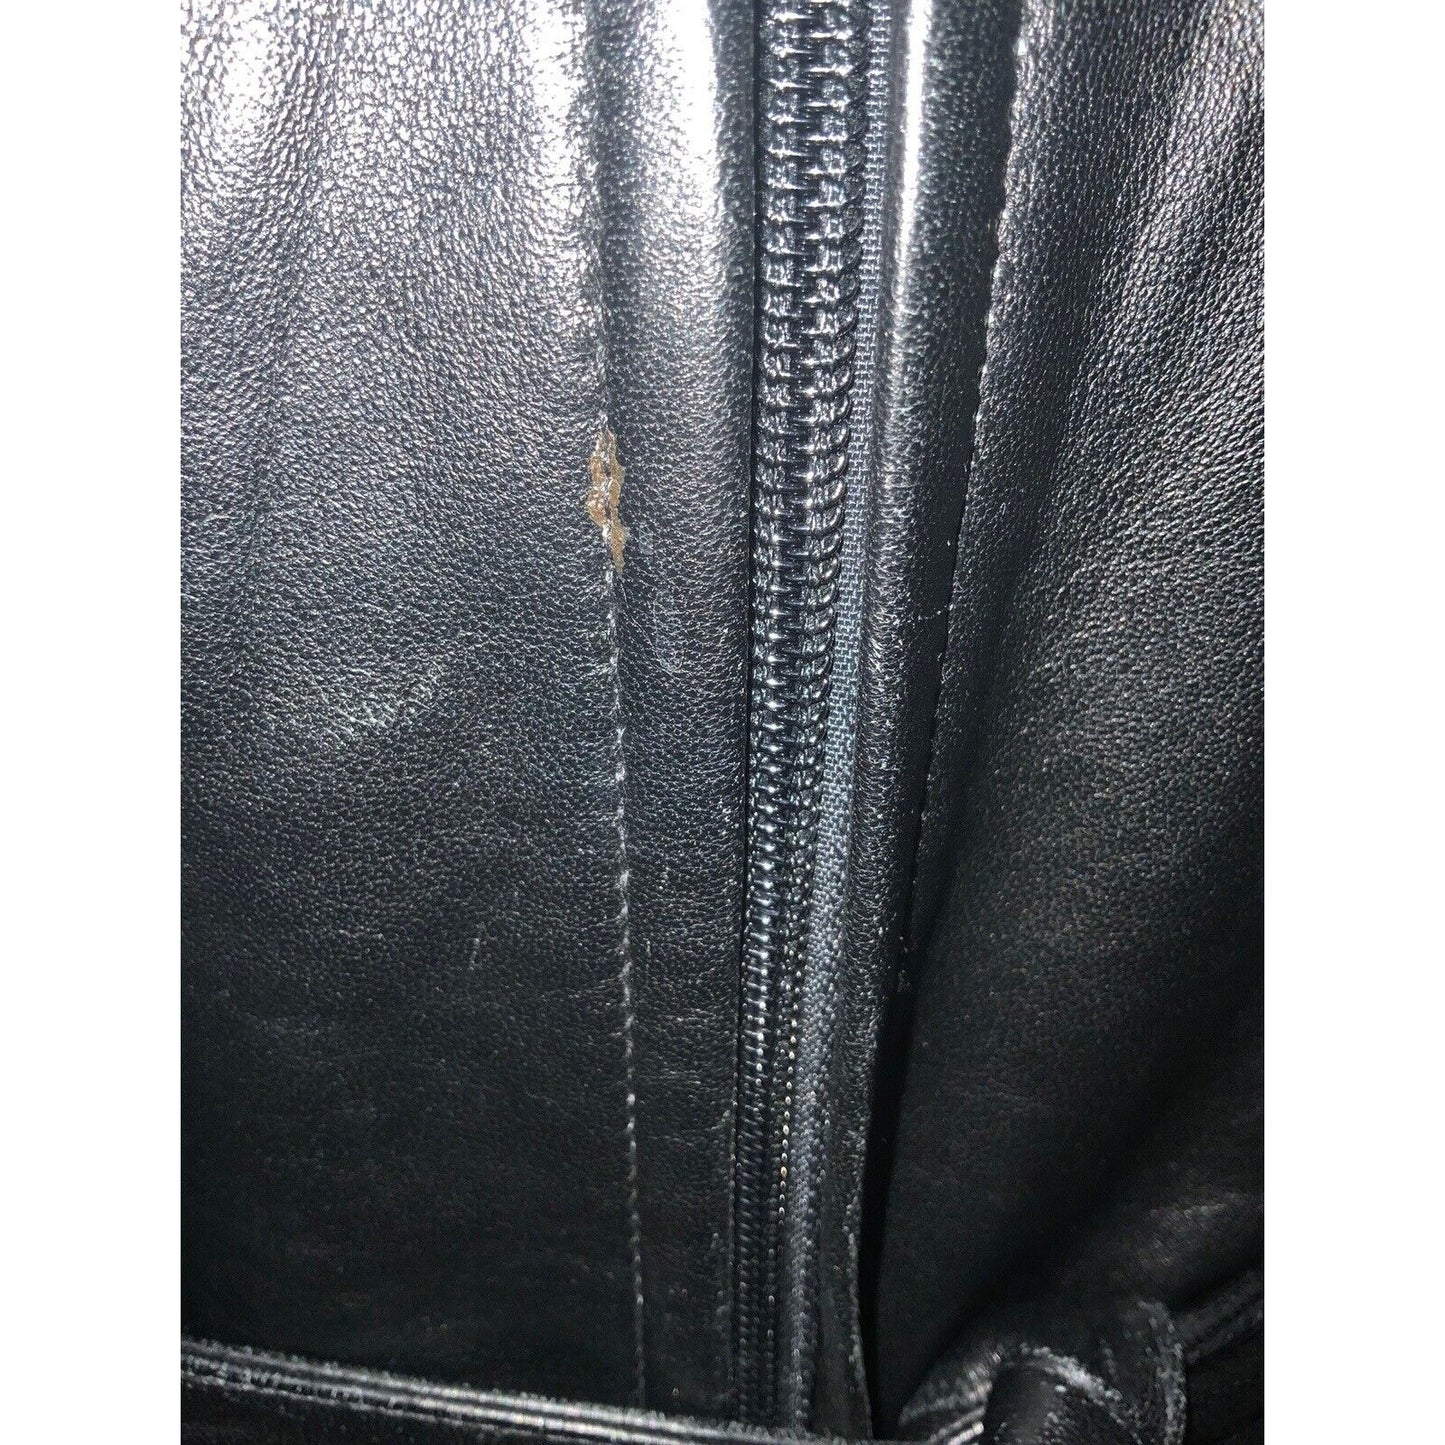 Closeup Of Scuff Mark Next To Jacket Zipper